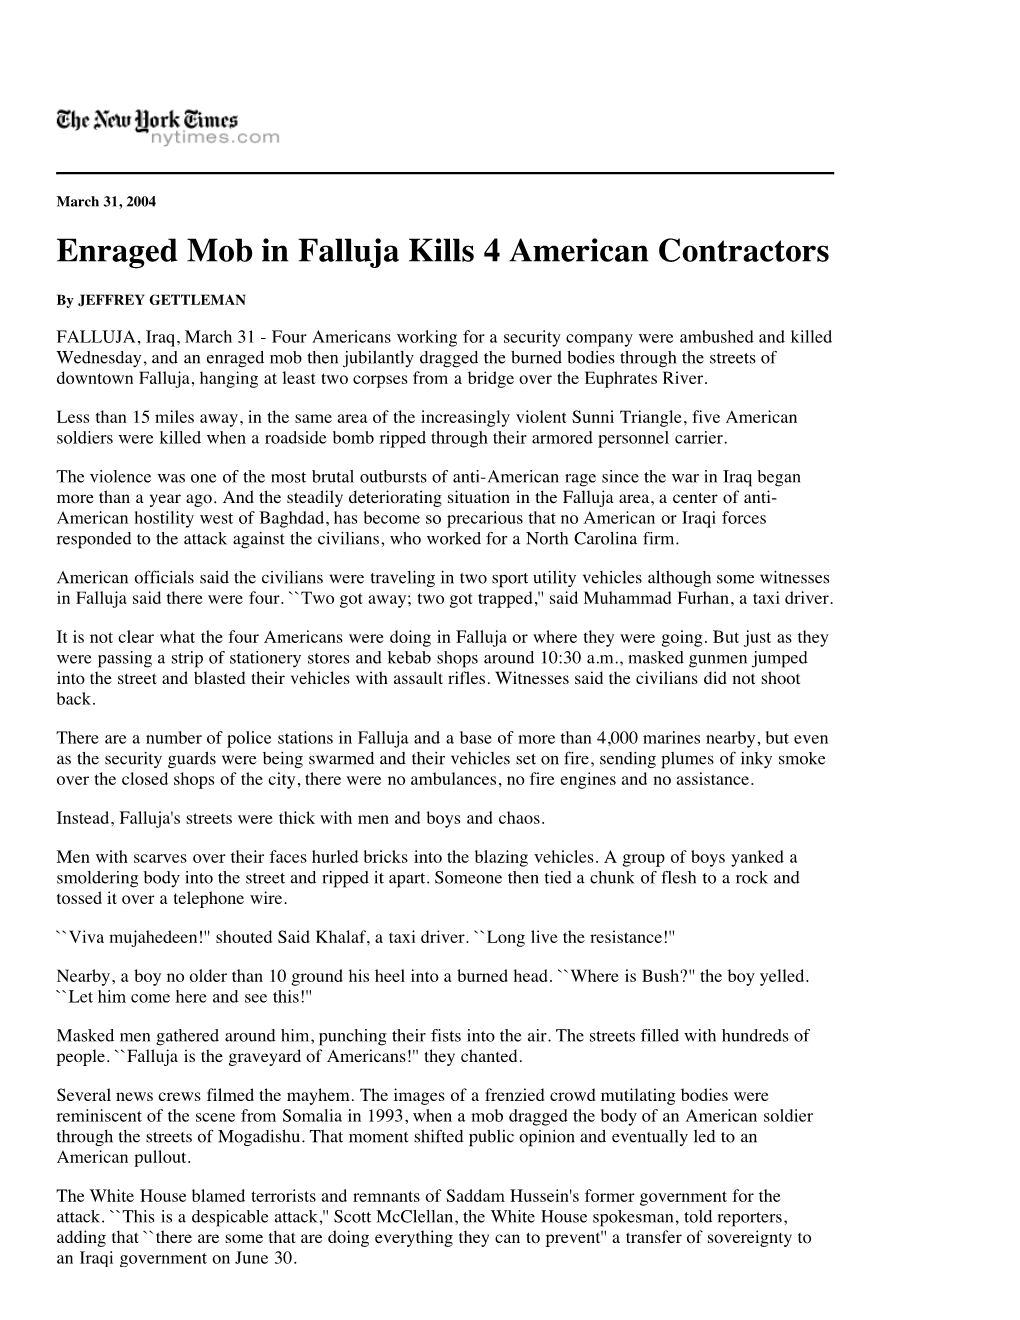 Enraged Mob in Falluja Kills 4 American Contractors